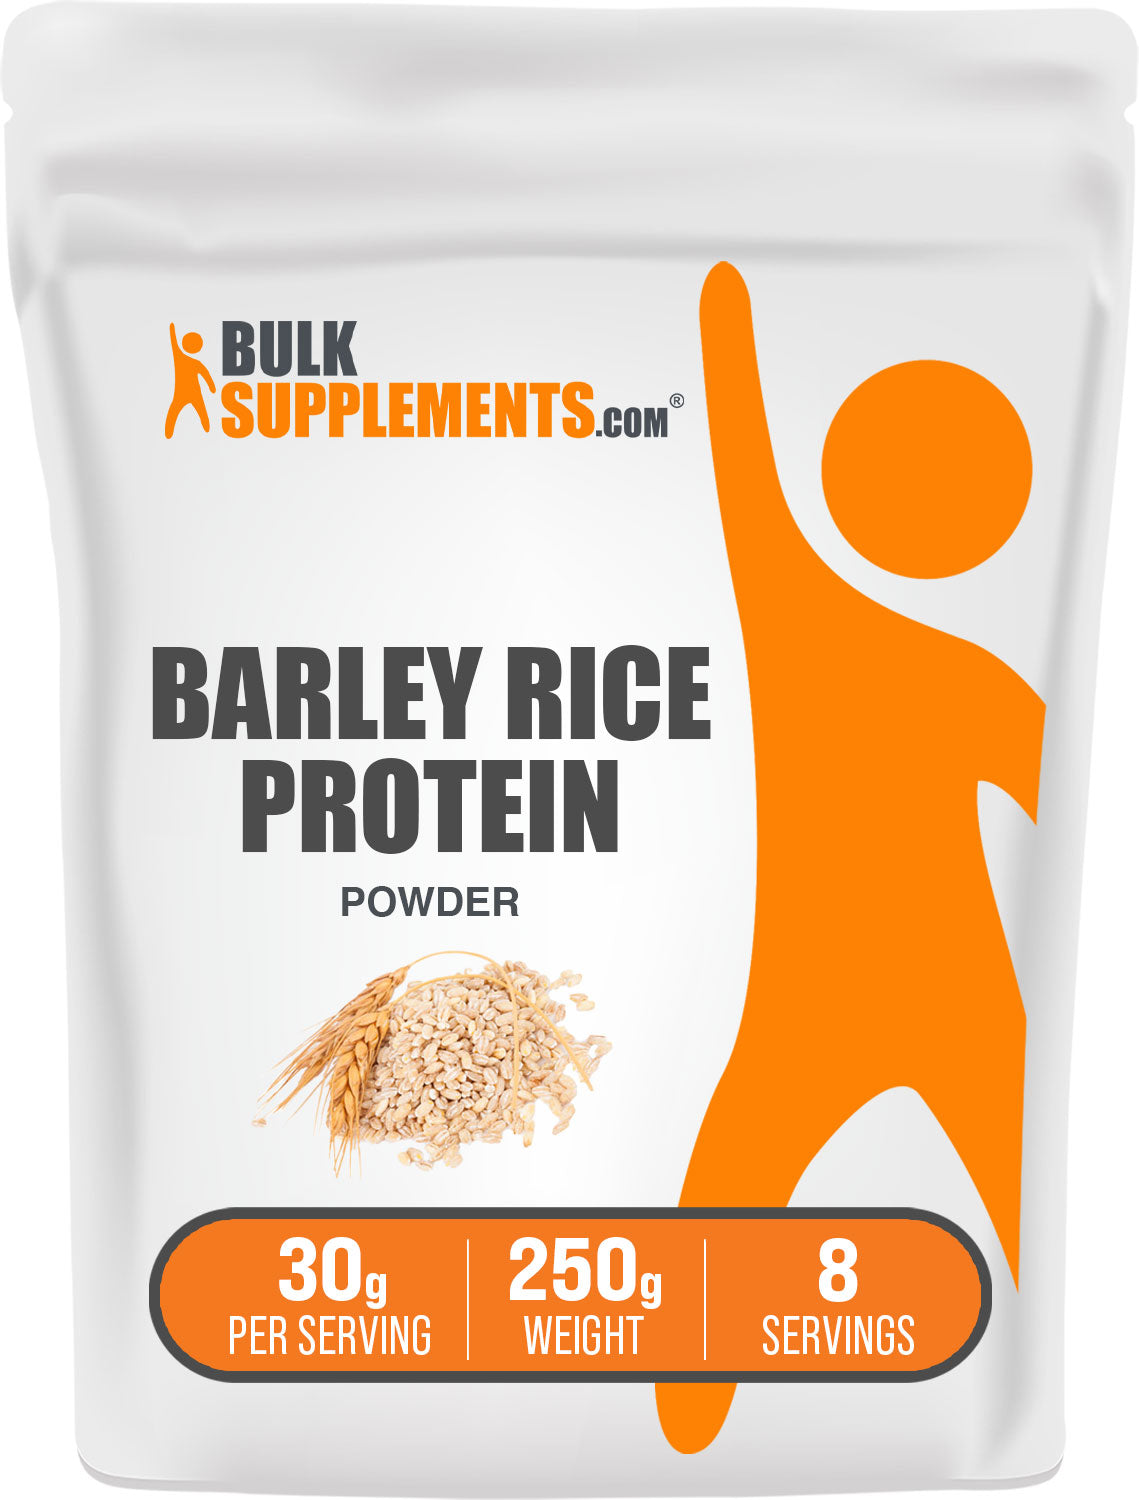 barley rice powder